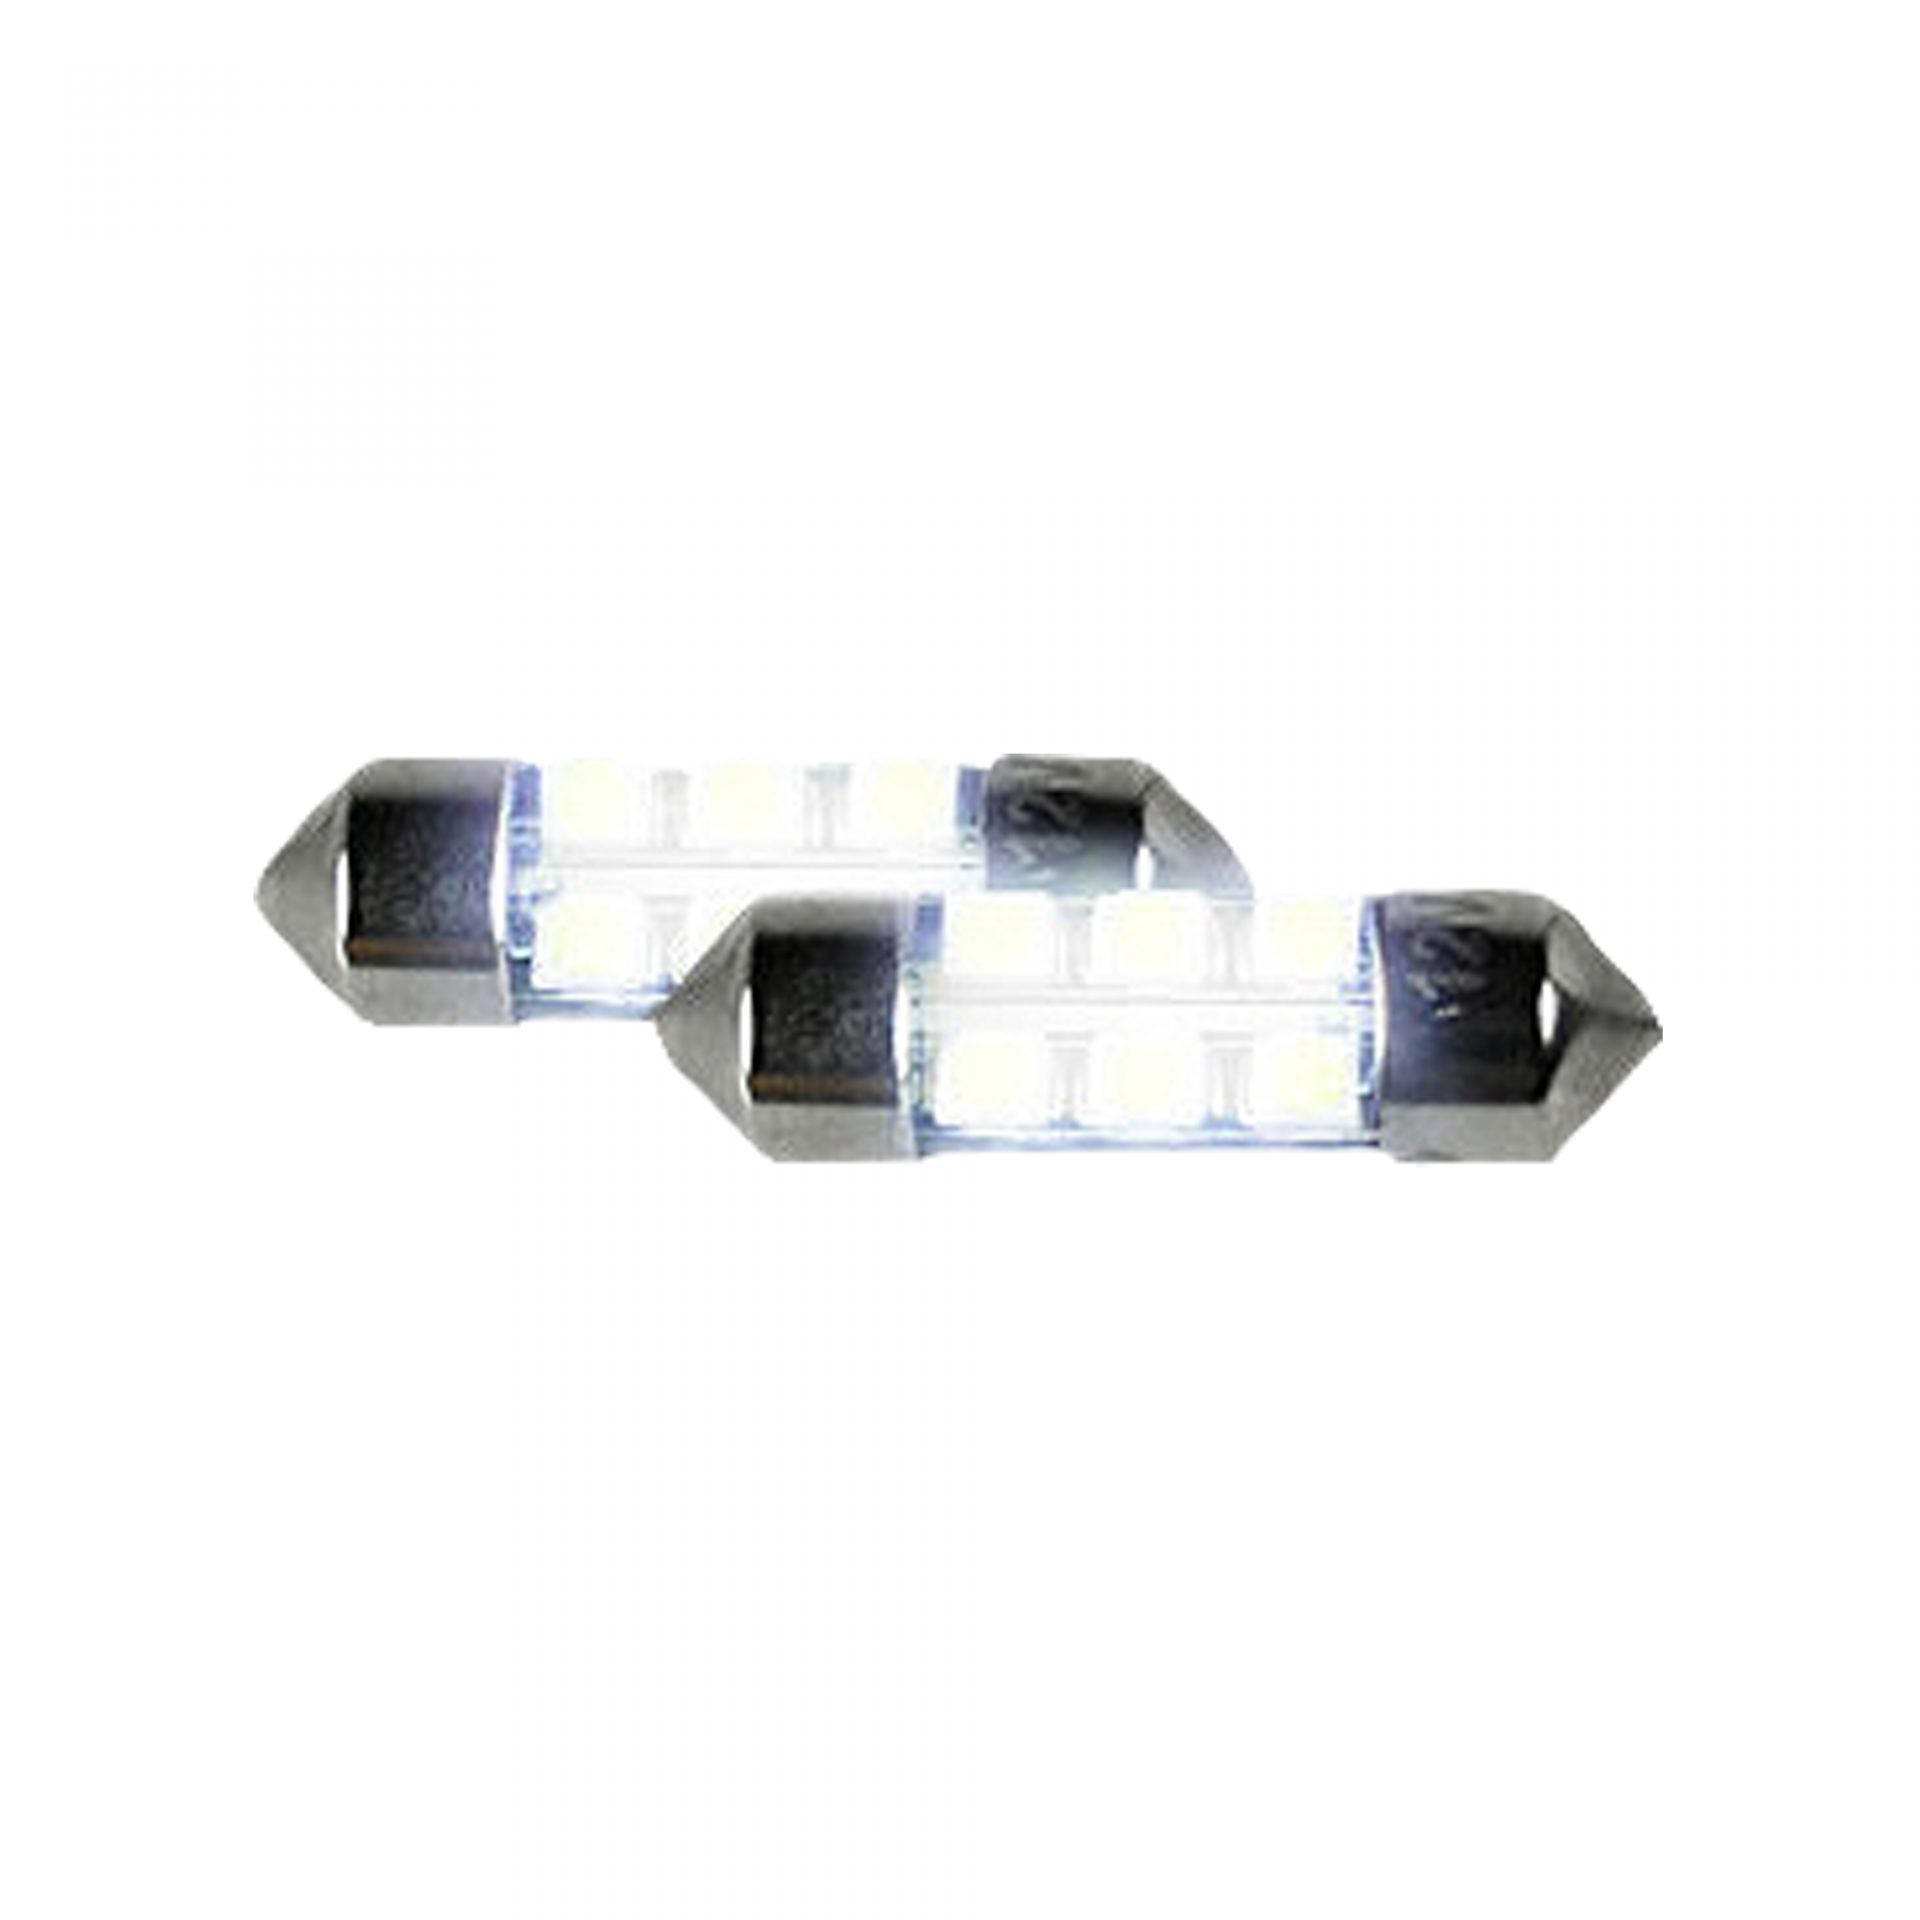 3175 10mm x 31mm Festoon Style High-Power 1-Watt 6 LED Bulbs in WHITE